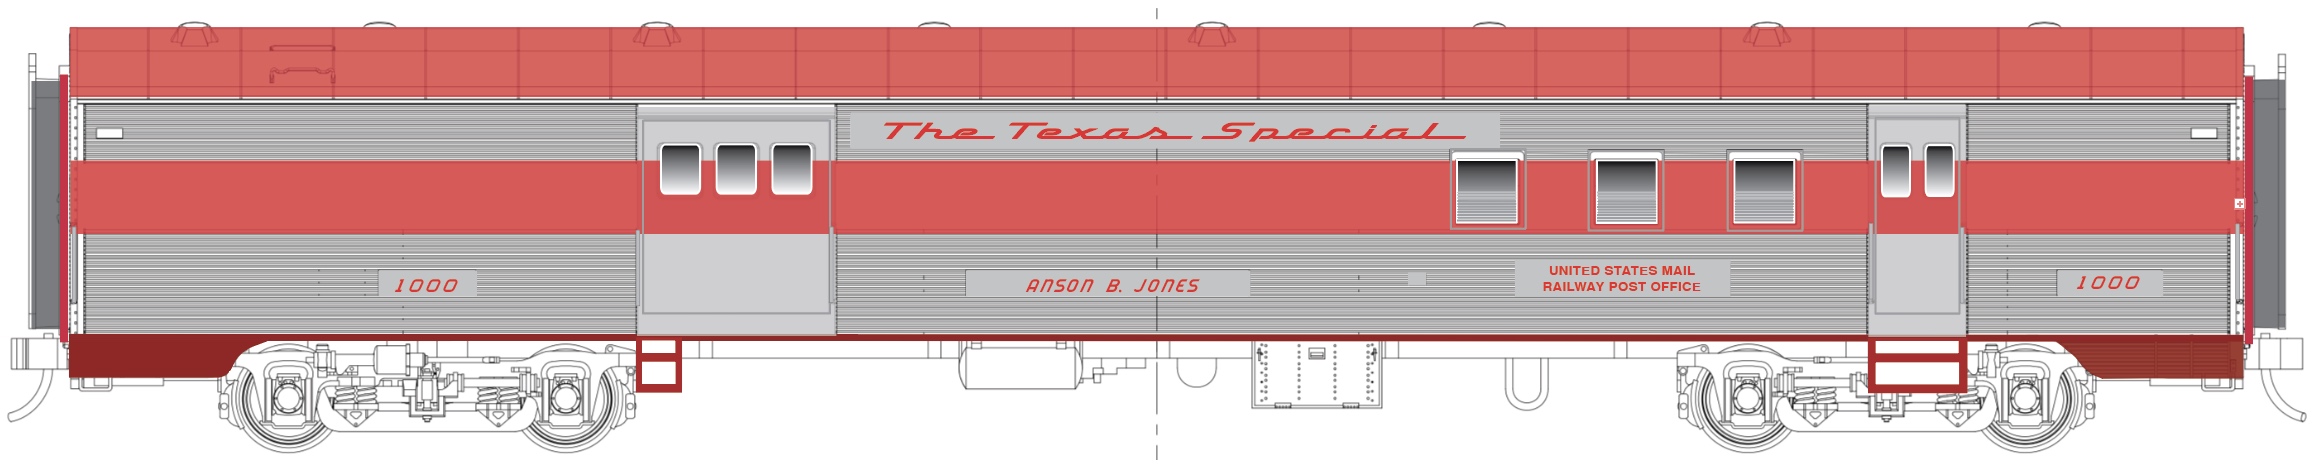 N Scale - RailSmith - 753601 - Passenger Car, Lightweight, Fluted, RPO - Texas Special - Anson B. Jones - 1000